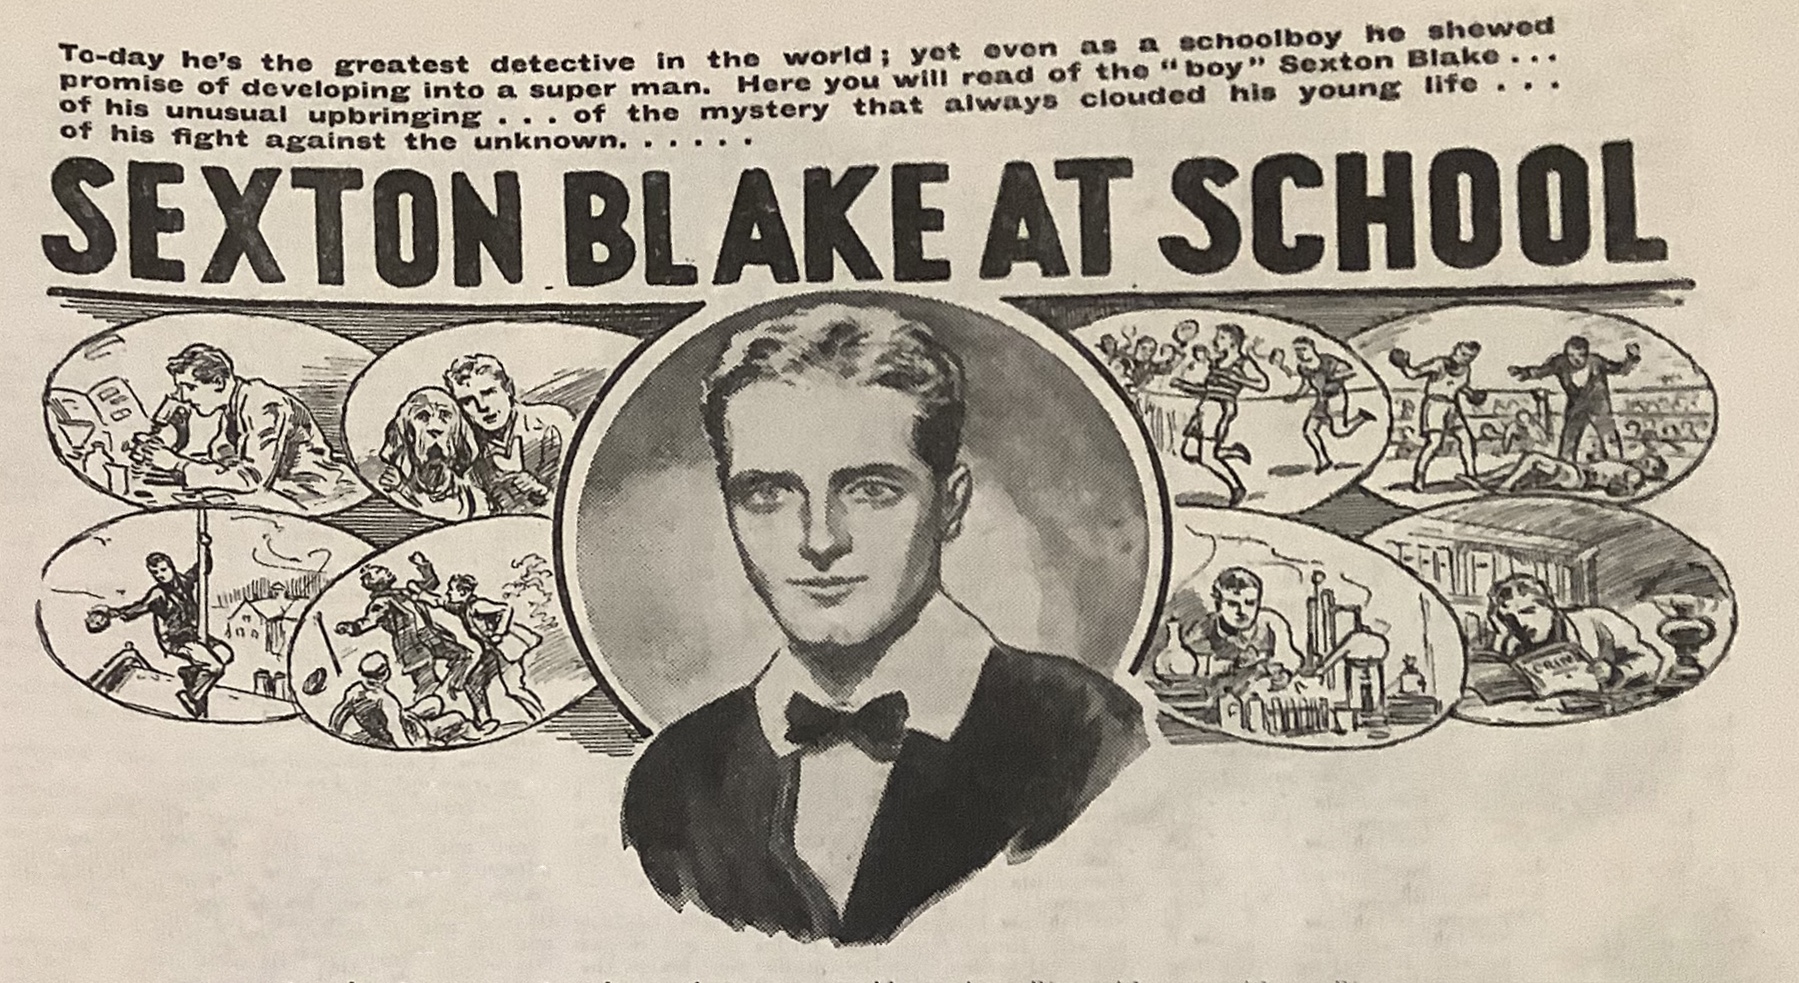 Sexton Blake at School